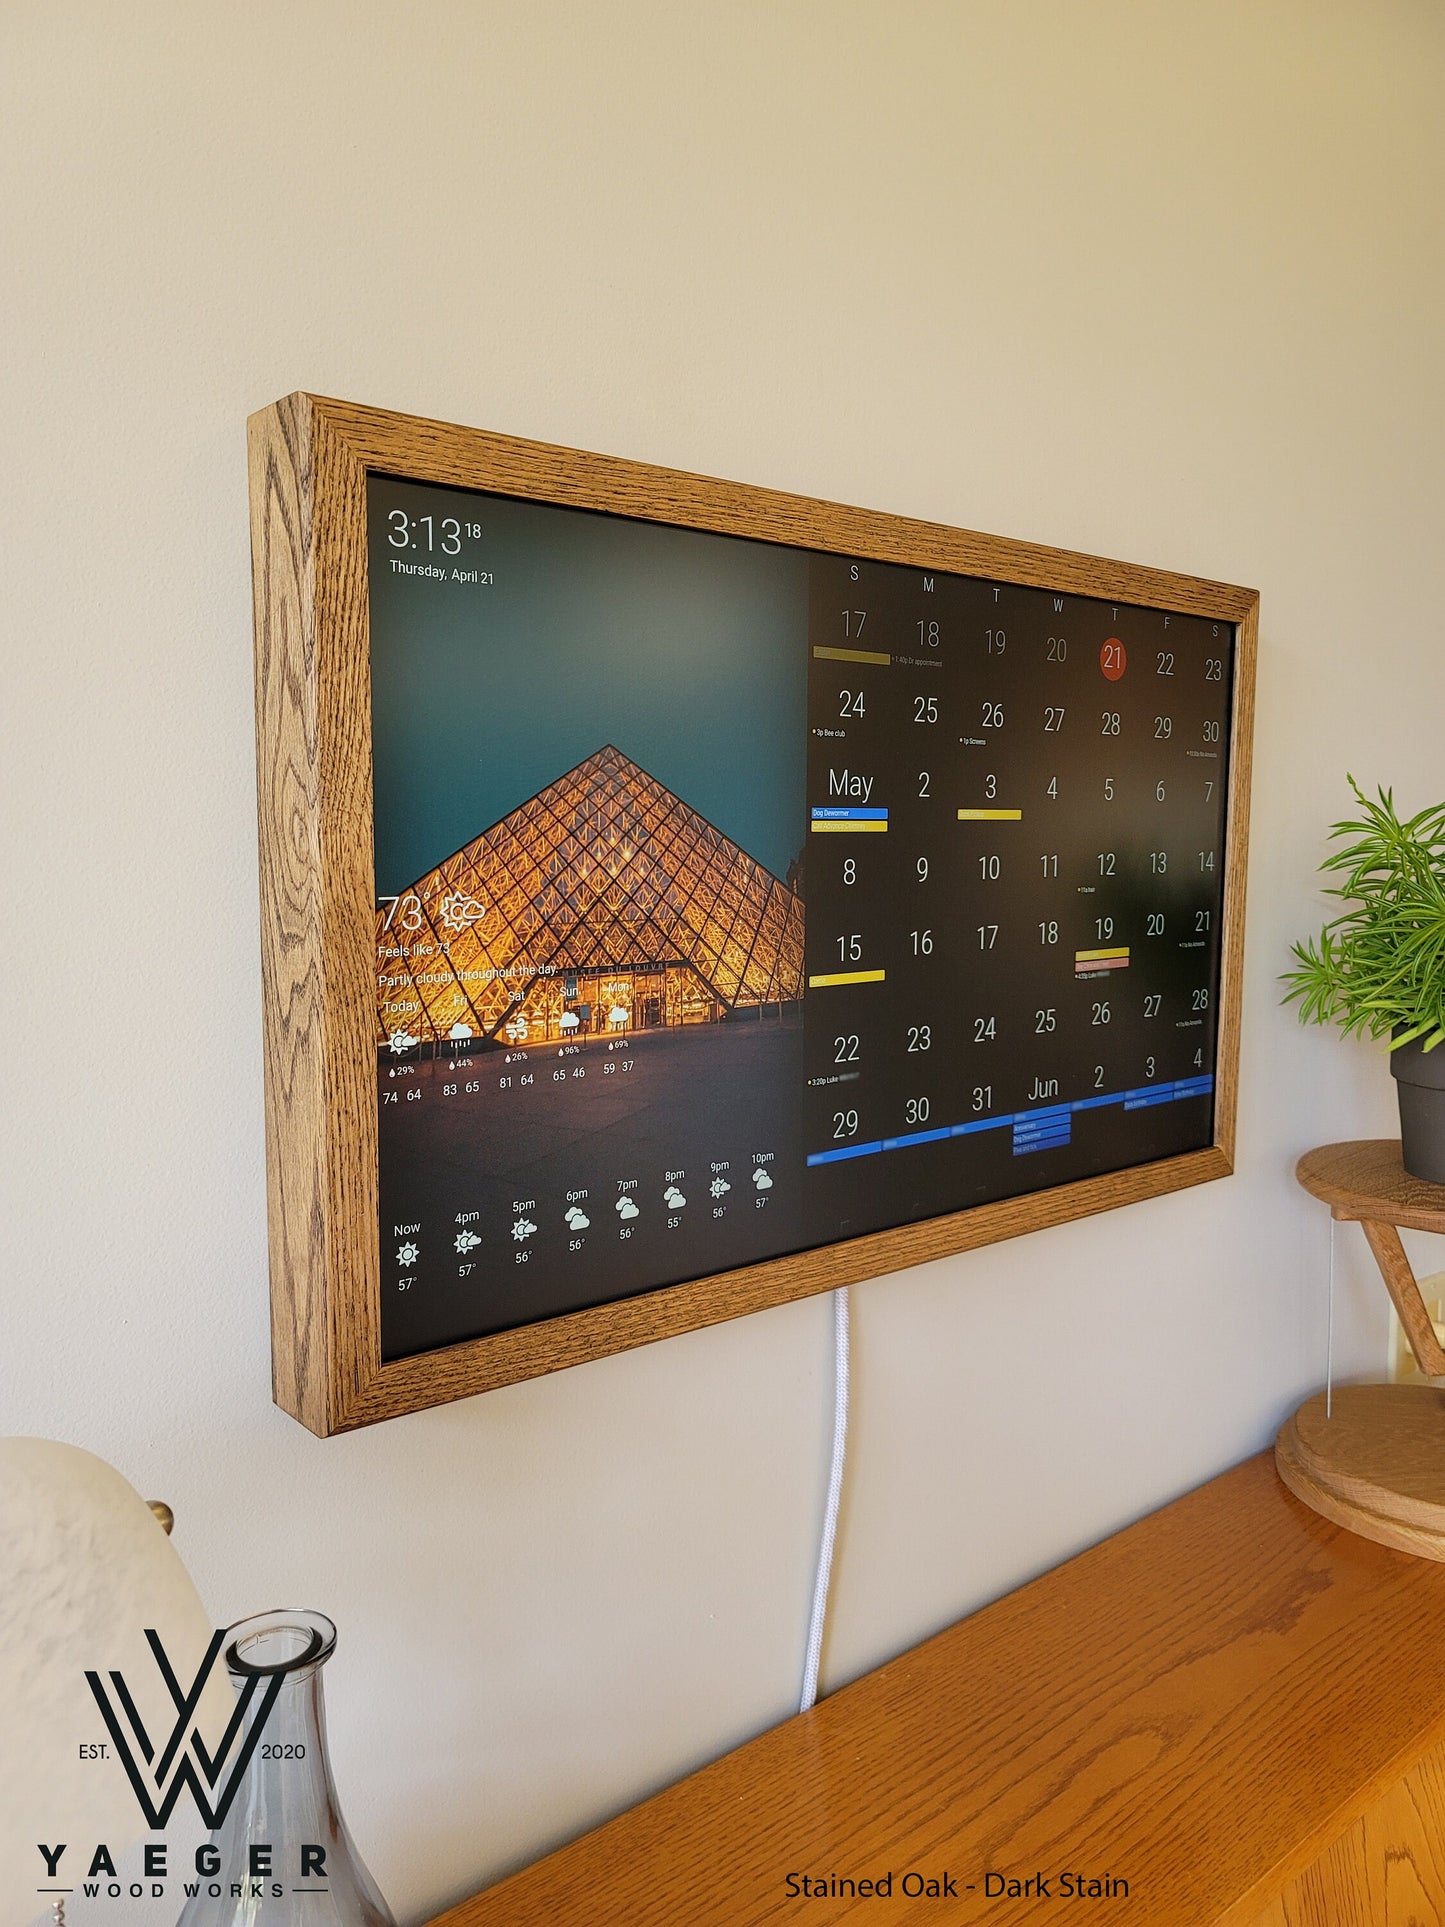 32in 4K Smart Calendar / Smart Wall Display / Photo Viewer